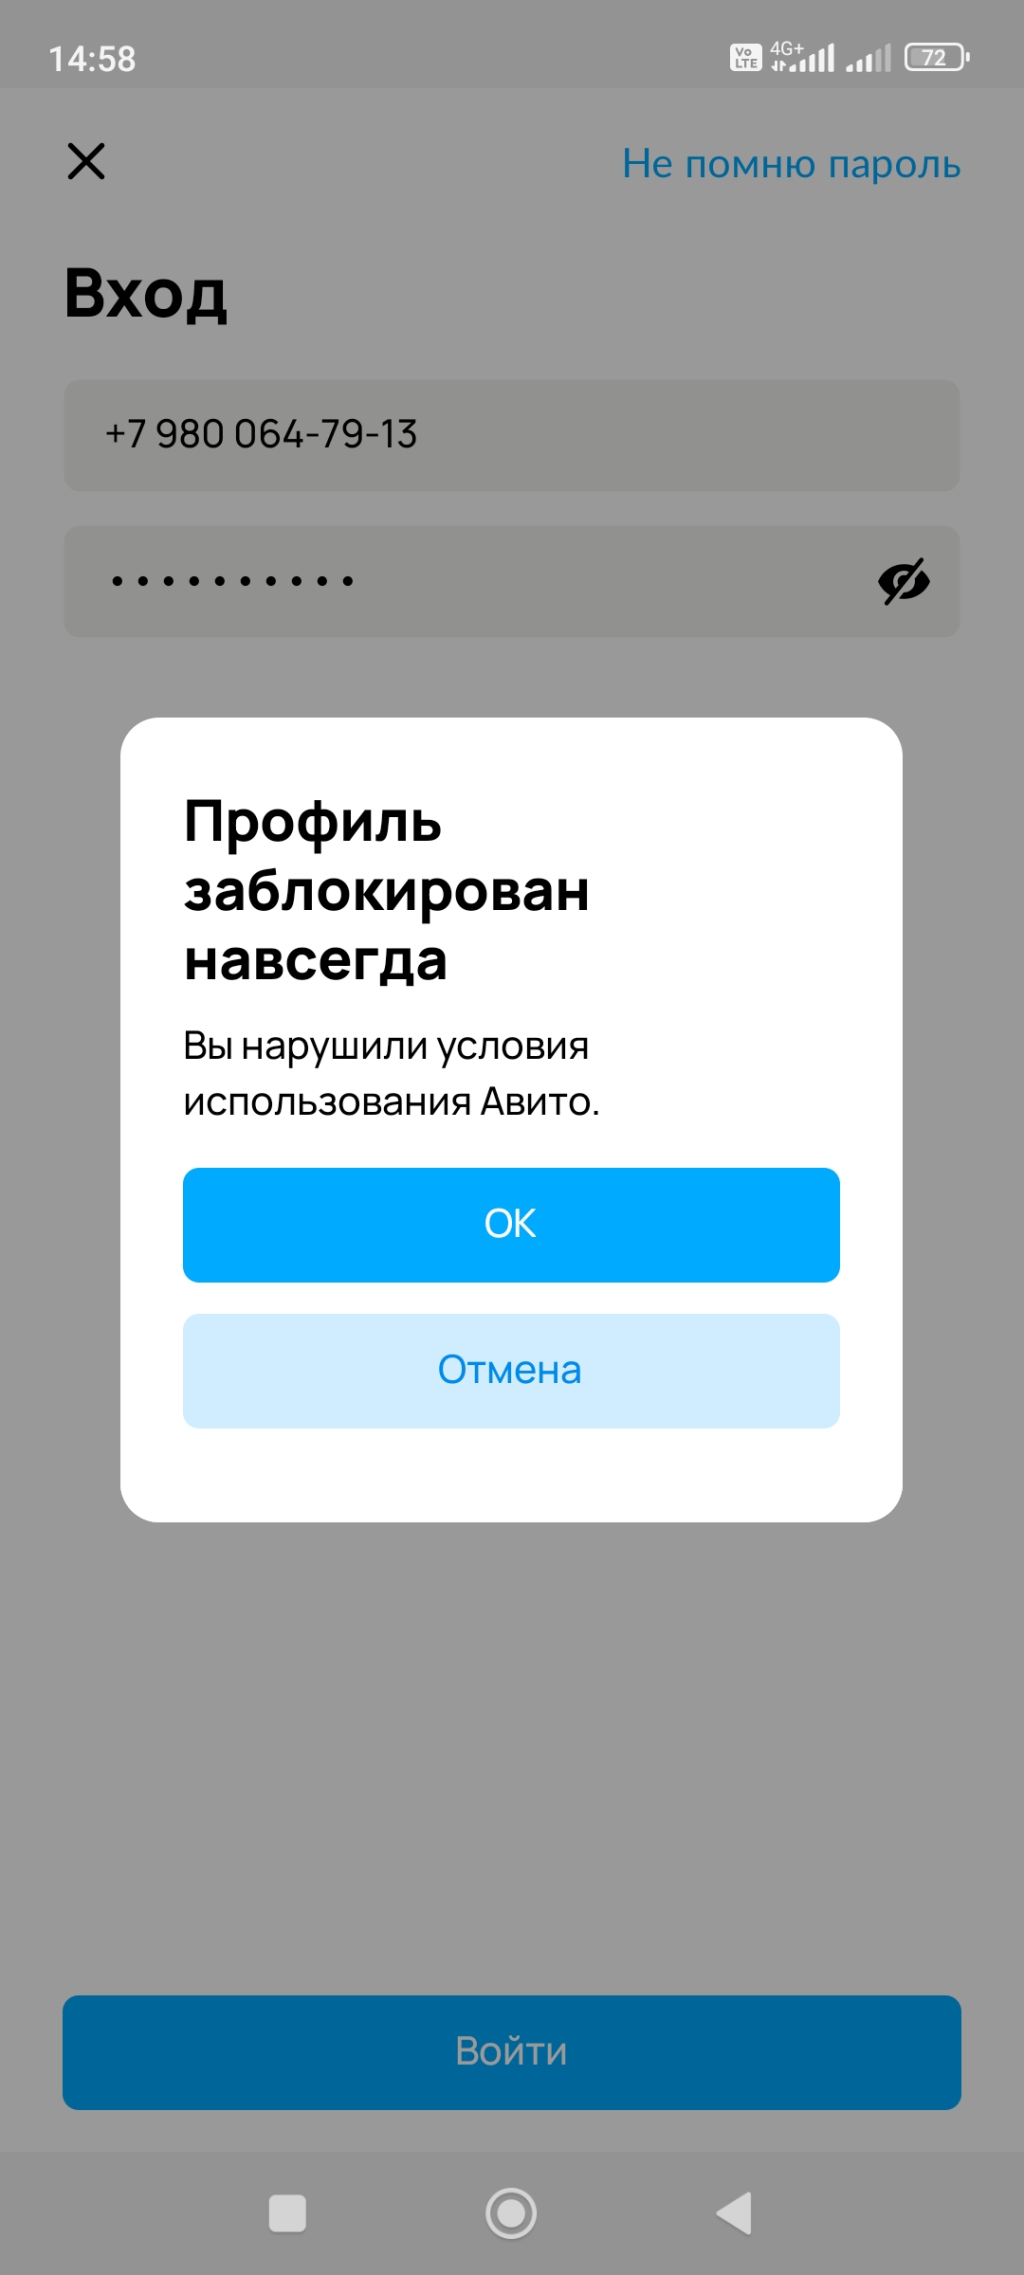 AVITO.ru - Заблокировали профиль